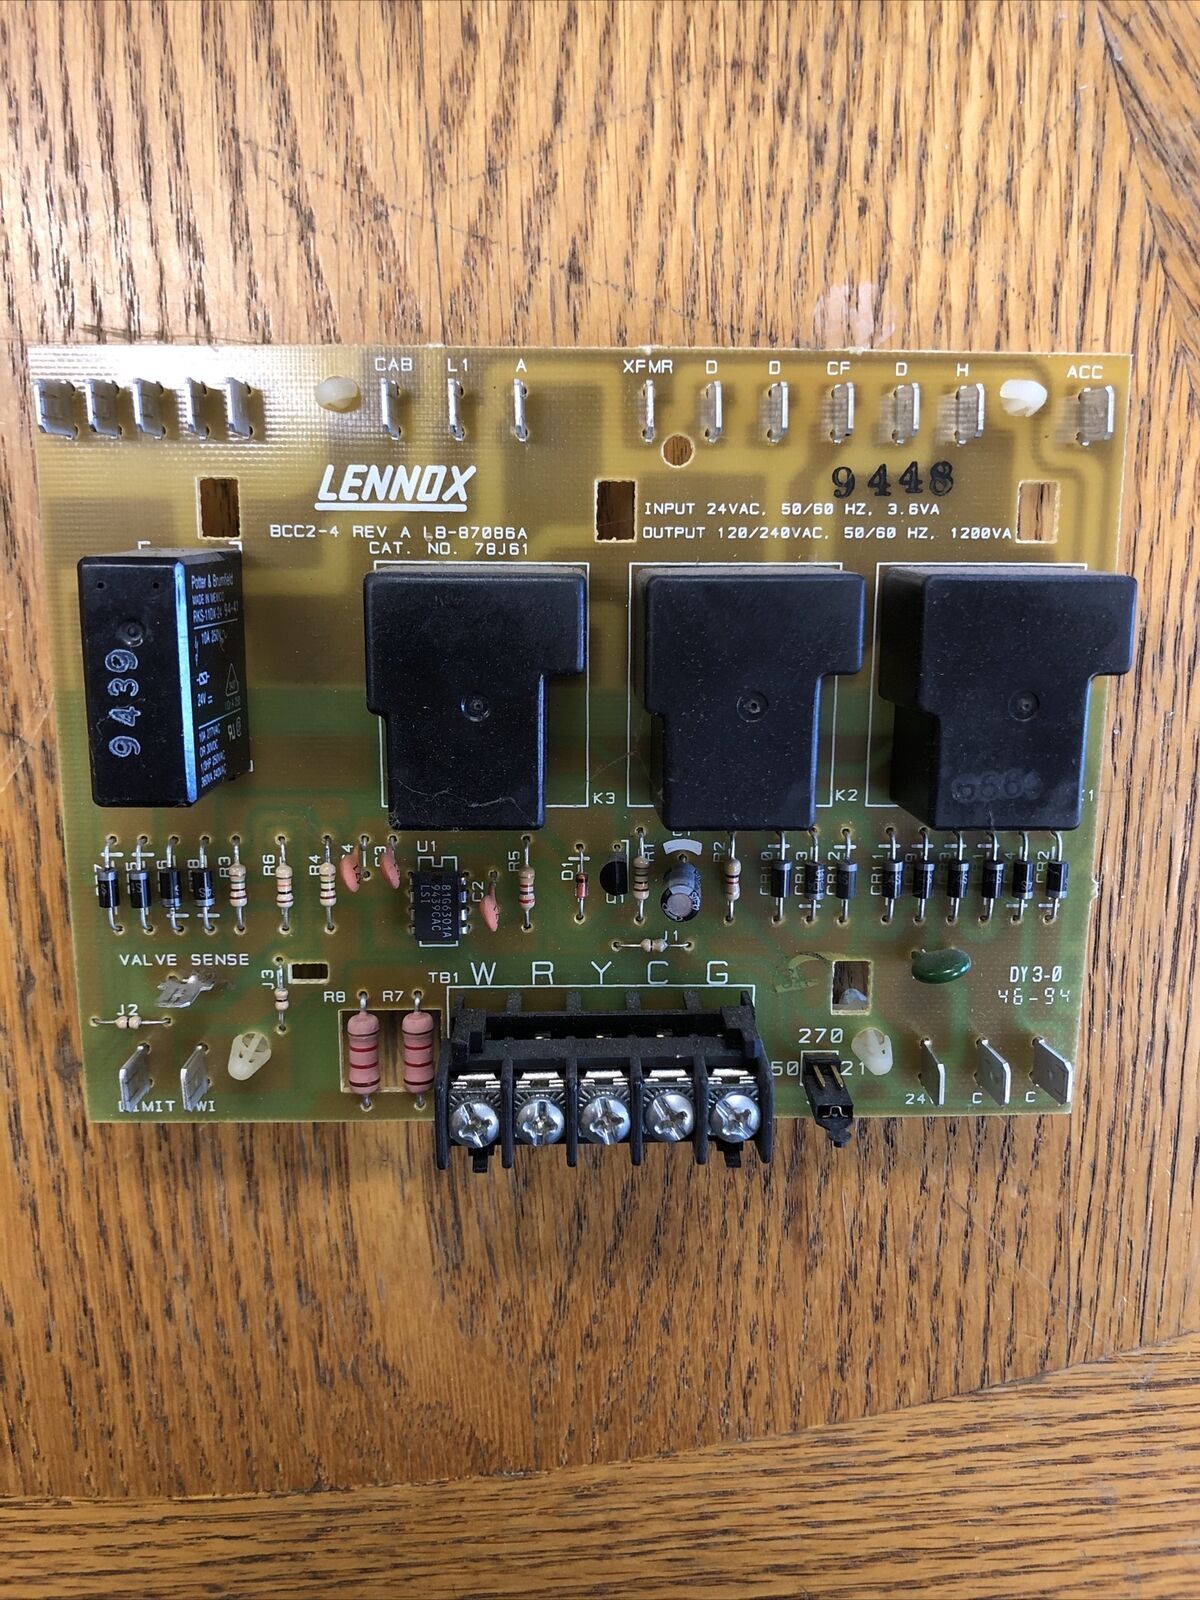 LENNOX BCC2-4 REV A LB-87086A Furnace Control Circuit Board 78J61